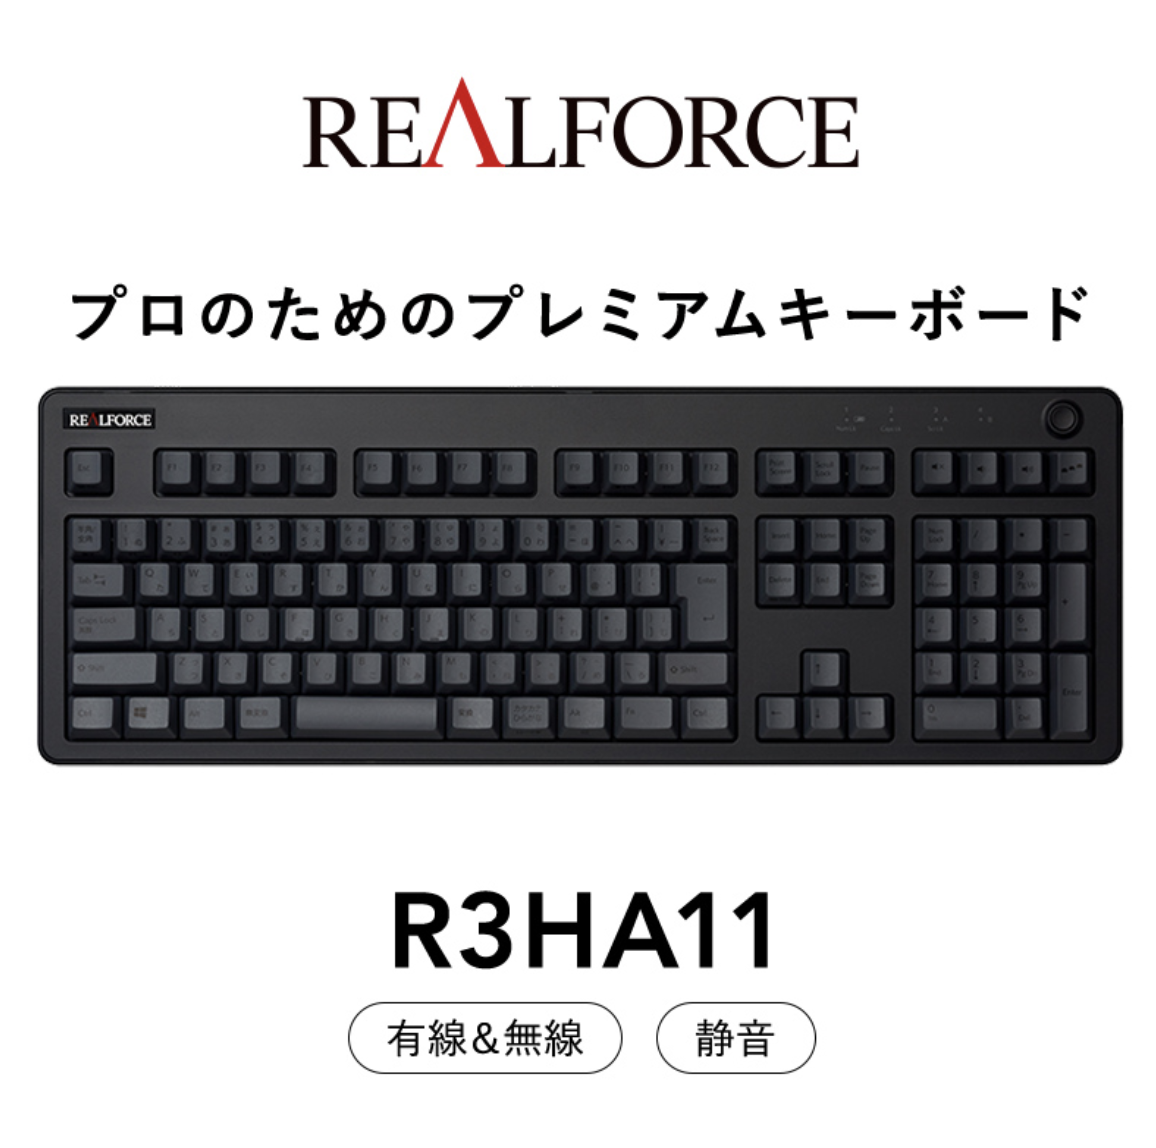 REALFORCE R3HA11 ブラック 日本語配列 キー昇華印刷 キー荷重ALL45g